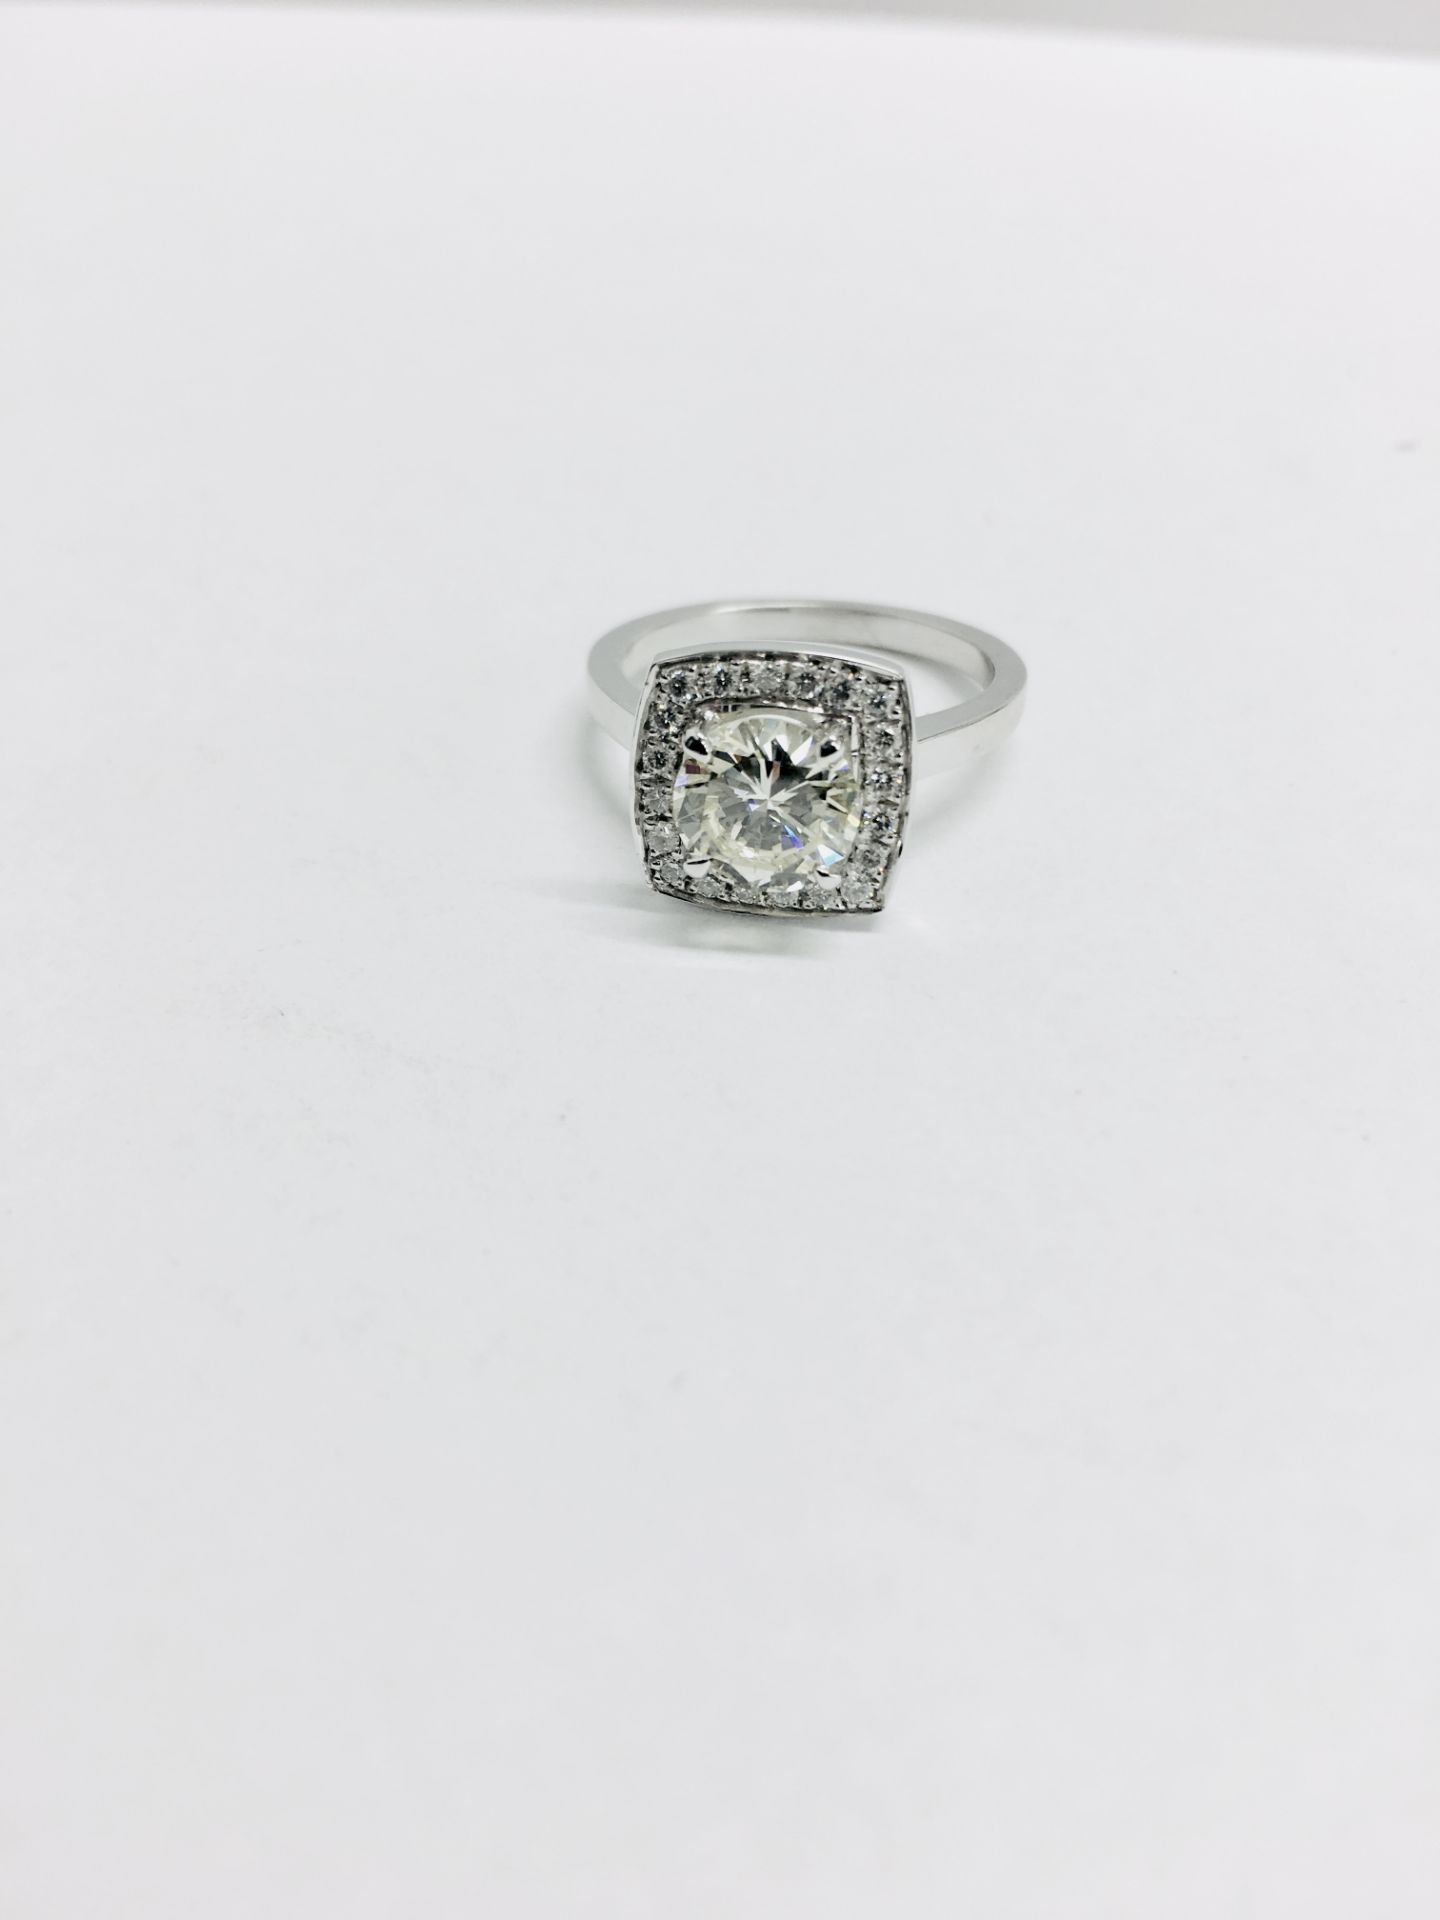 18ct white gold Handmade Halo style ring,0.50ct vvs1 grade g colour diamond,18ct white gold settig - Image 6 of 6